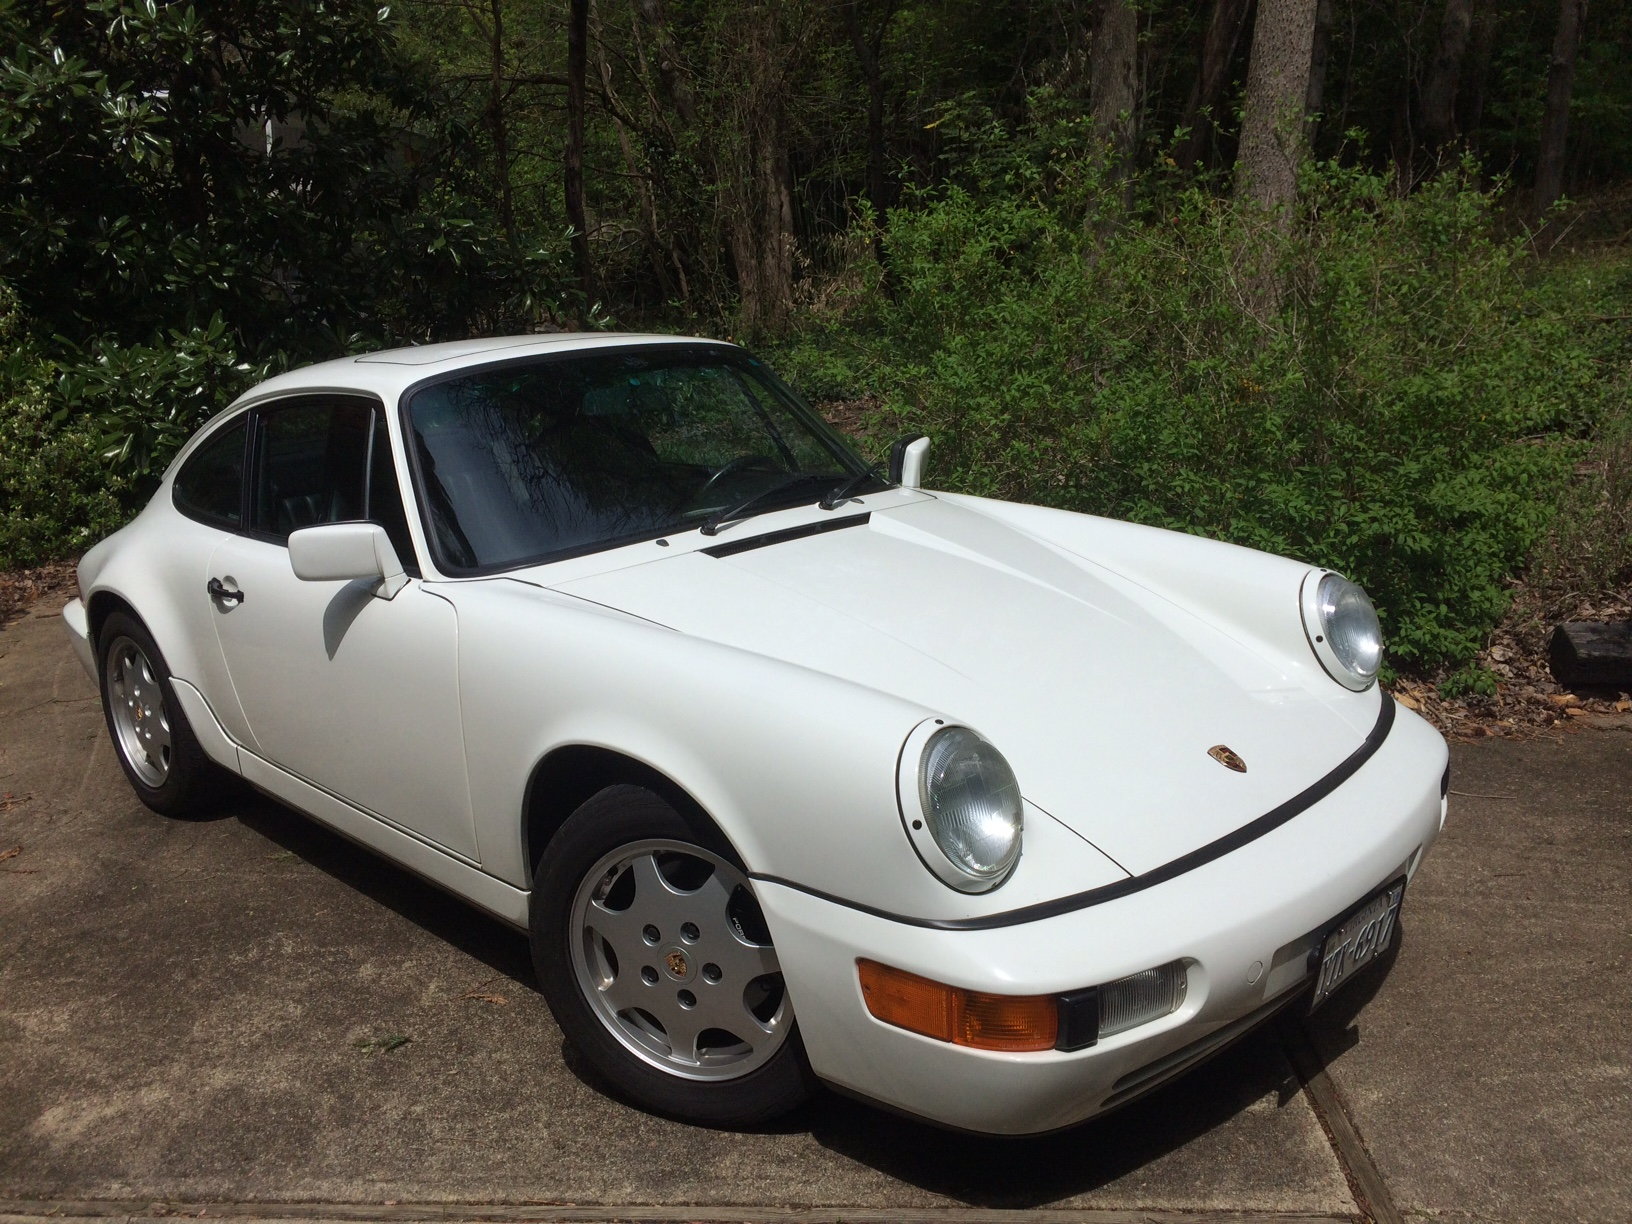 1991 Porsche 911 - 1991 964 C2 - Used - VIN WP0AB2969MS410467 - 6 cyl - 2WD - Manual - Coupe - White - Alexandria, VA 22306, United States